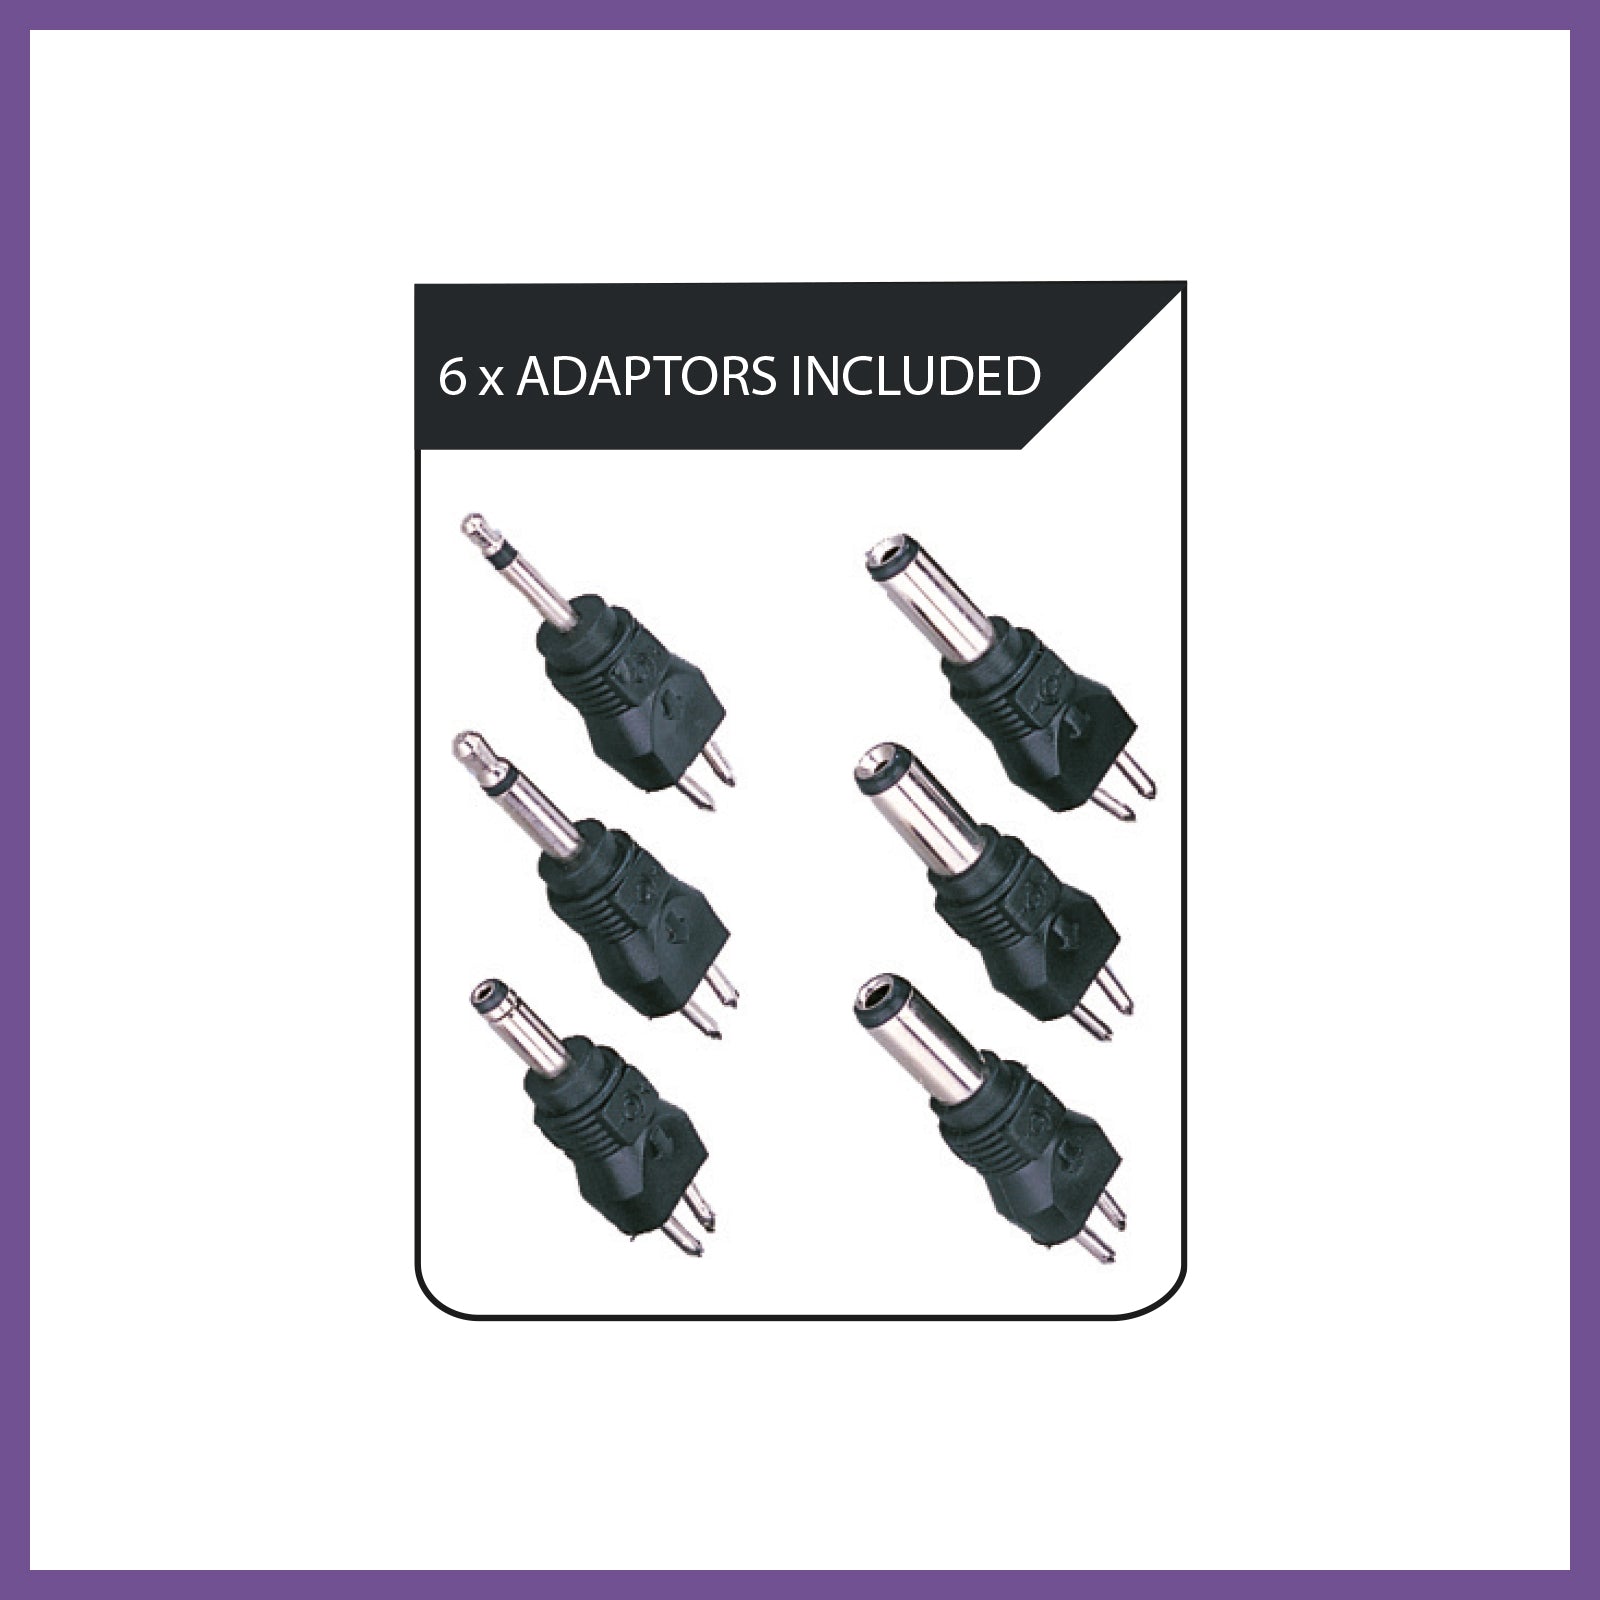 3-12 VDC Multi Voltage Power Supply With Plug Adaptors